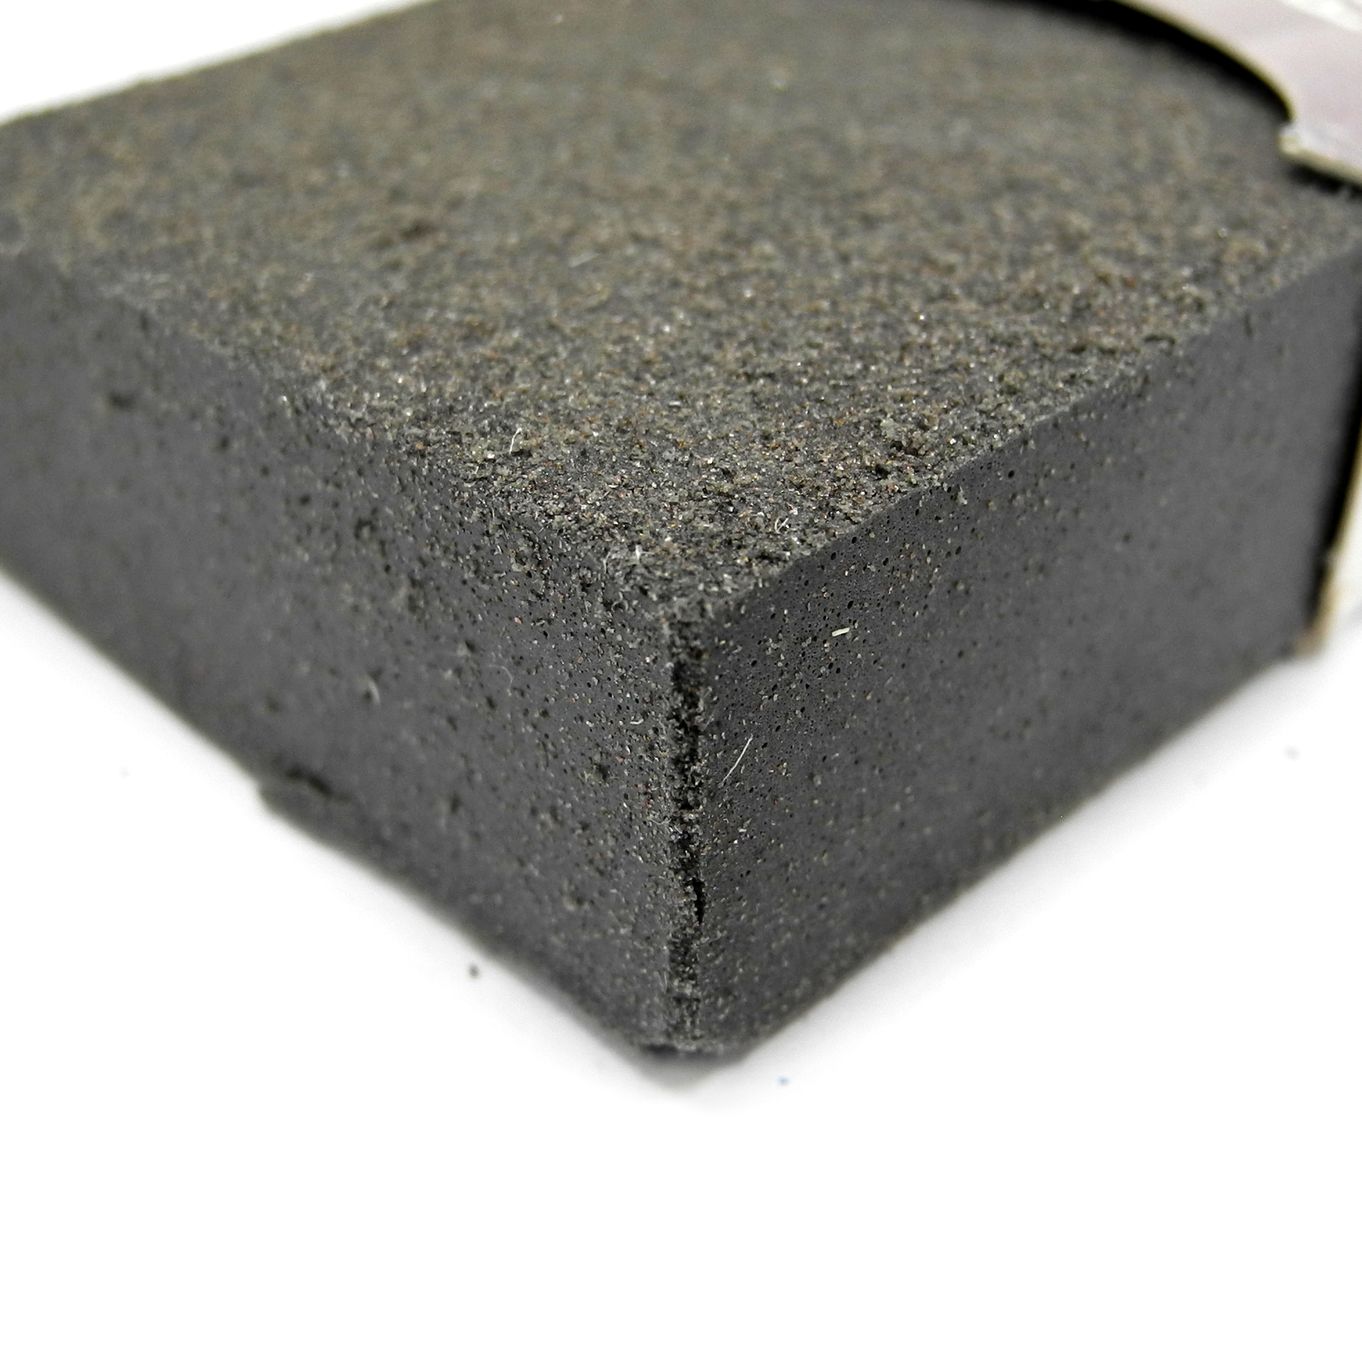 Garryflex Abrasive Cleaning Blocks | Esslinger